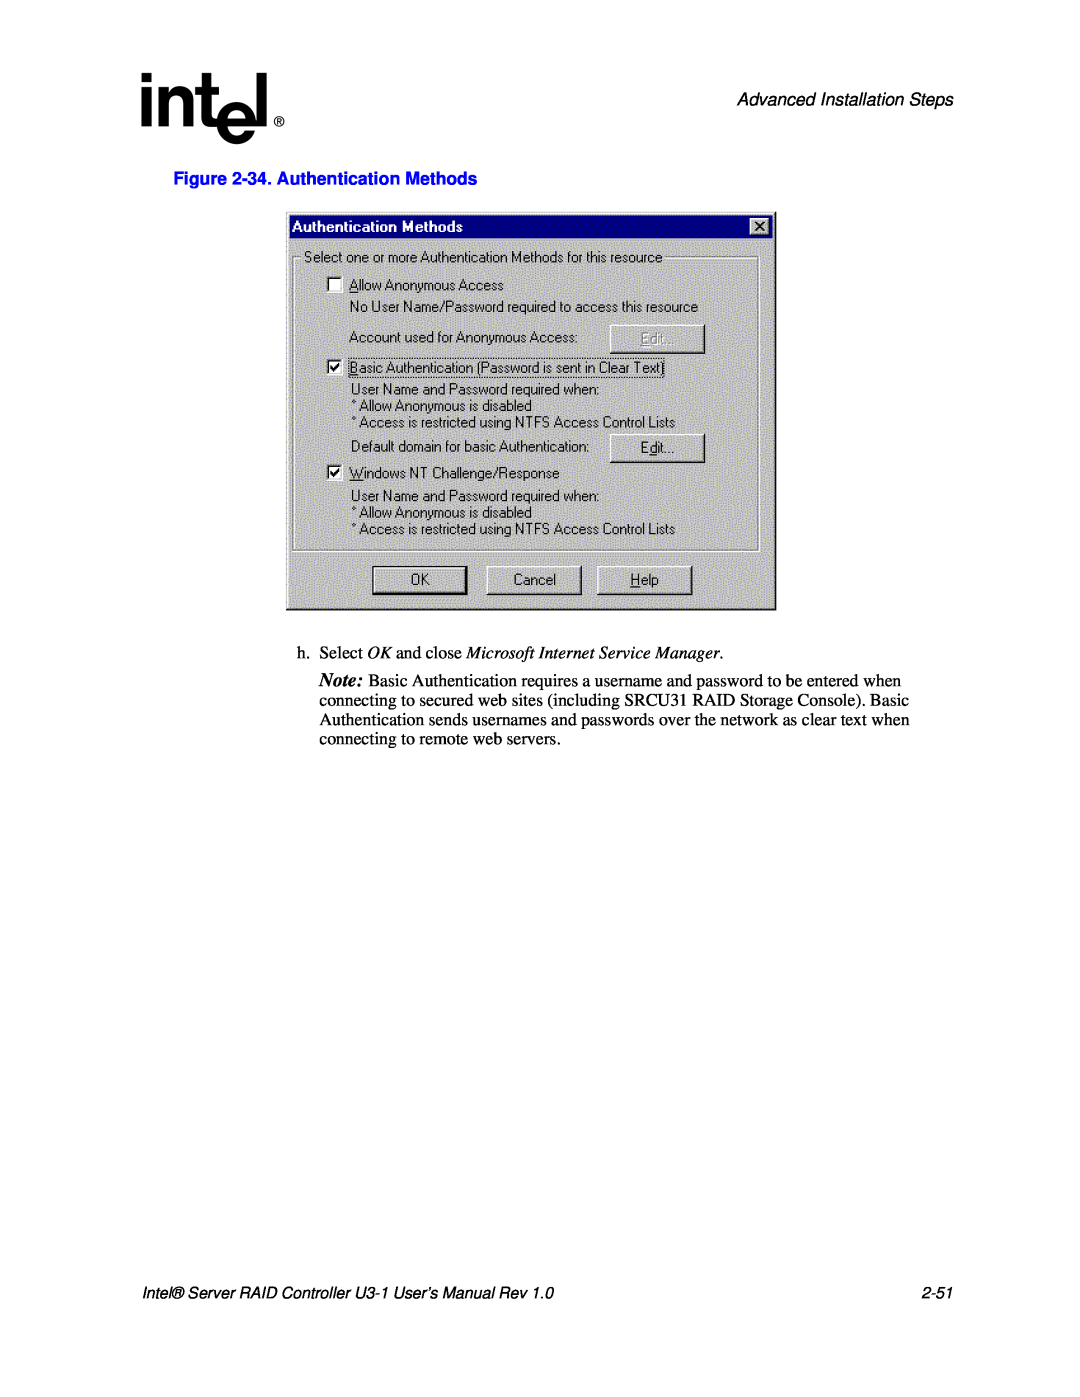 Intel SRCU31 user manual Advanced Installation Steps, 34.Authentication Methods, 2-51 